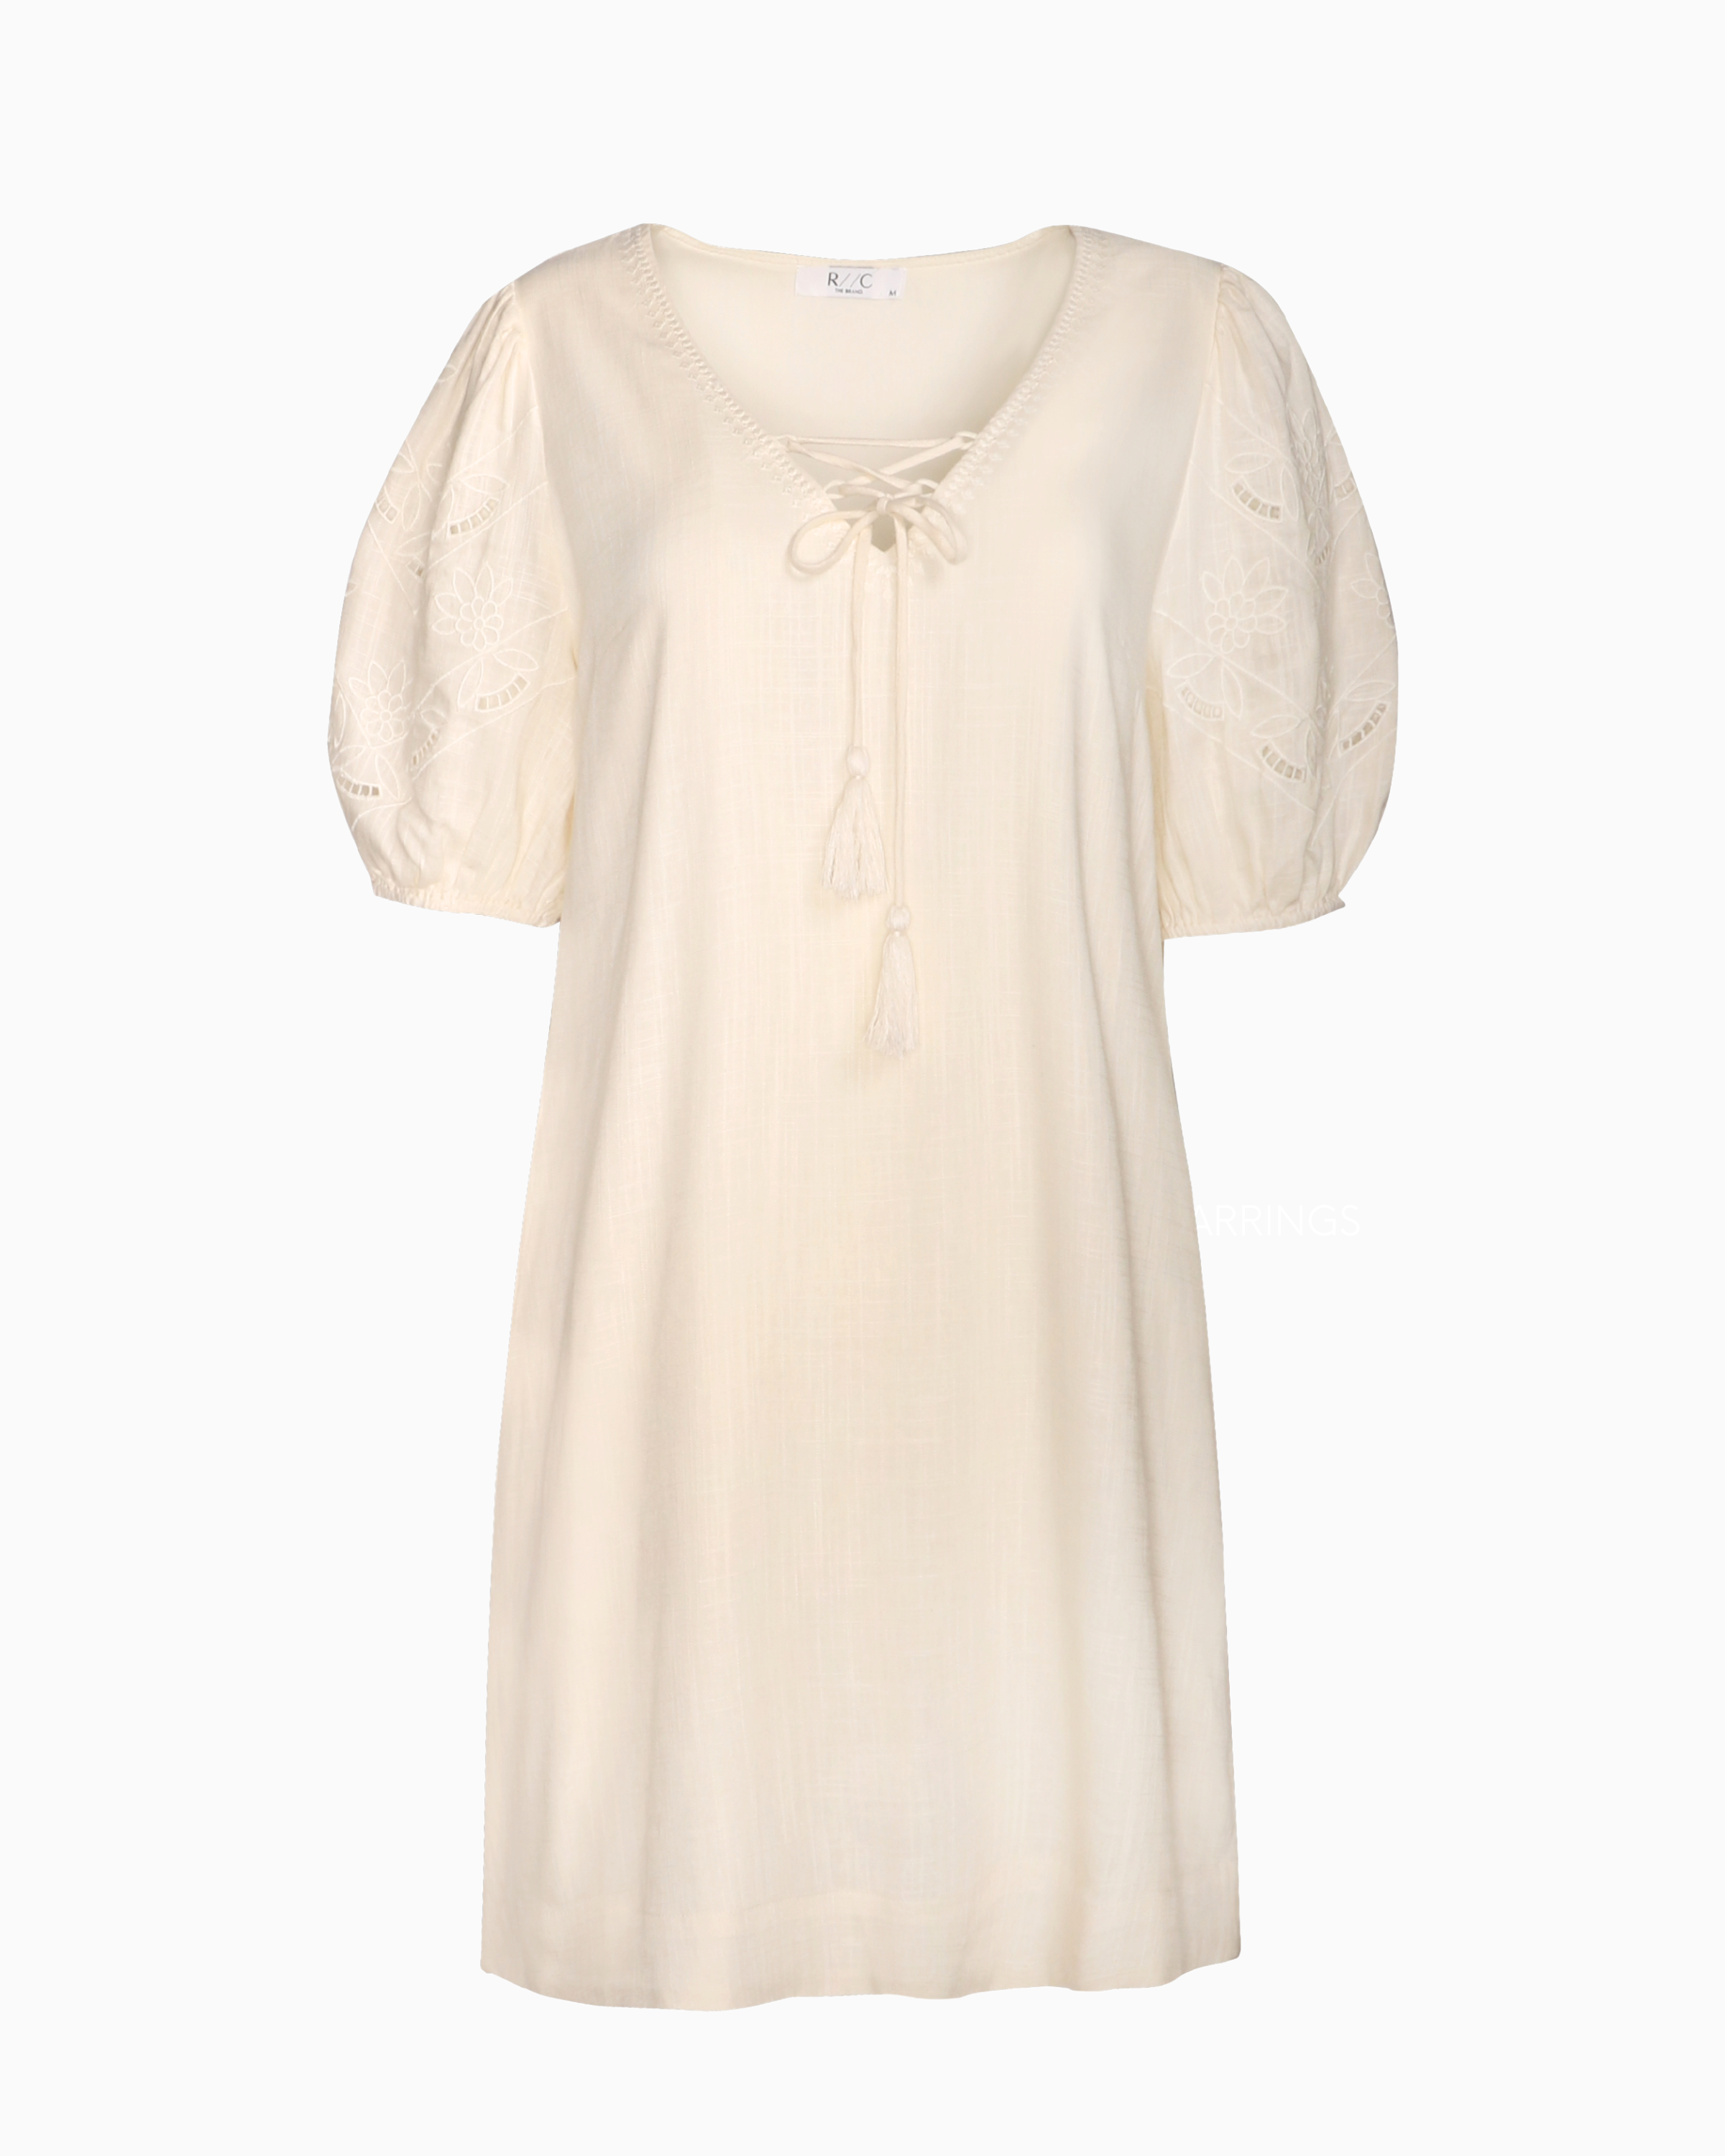 R//C V-Neck Puff Sleeve Mini Dress in Vanilla